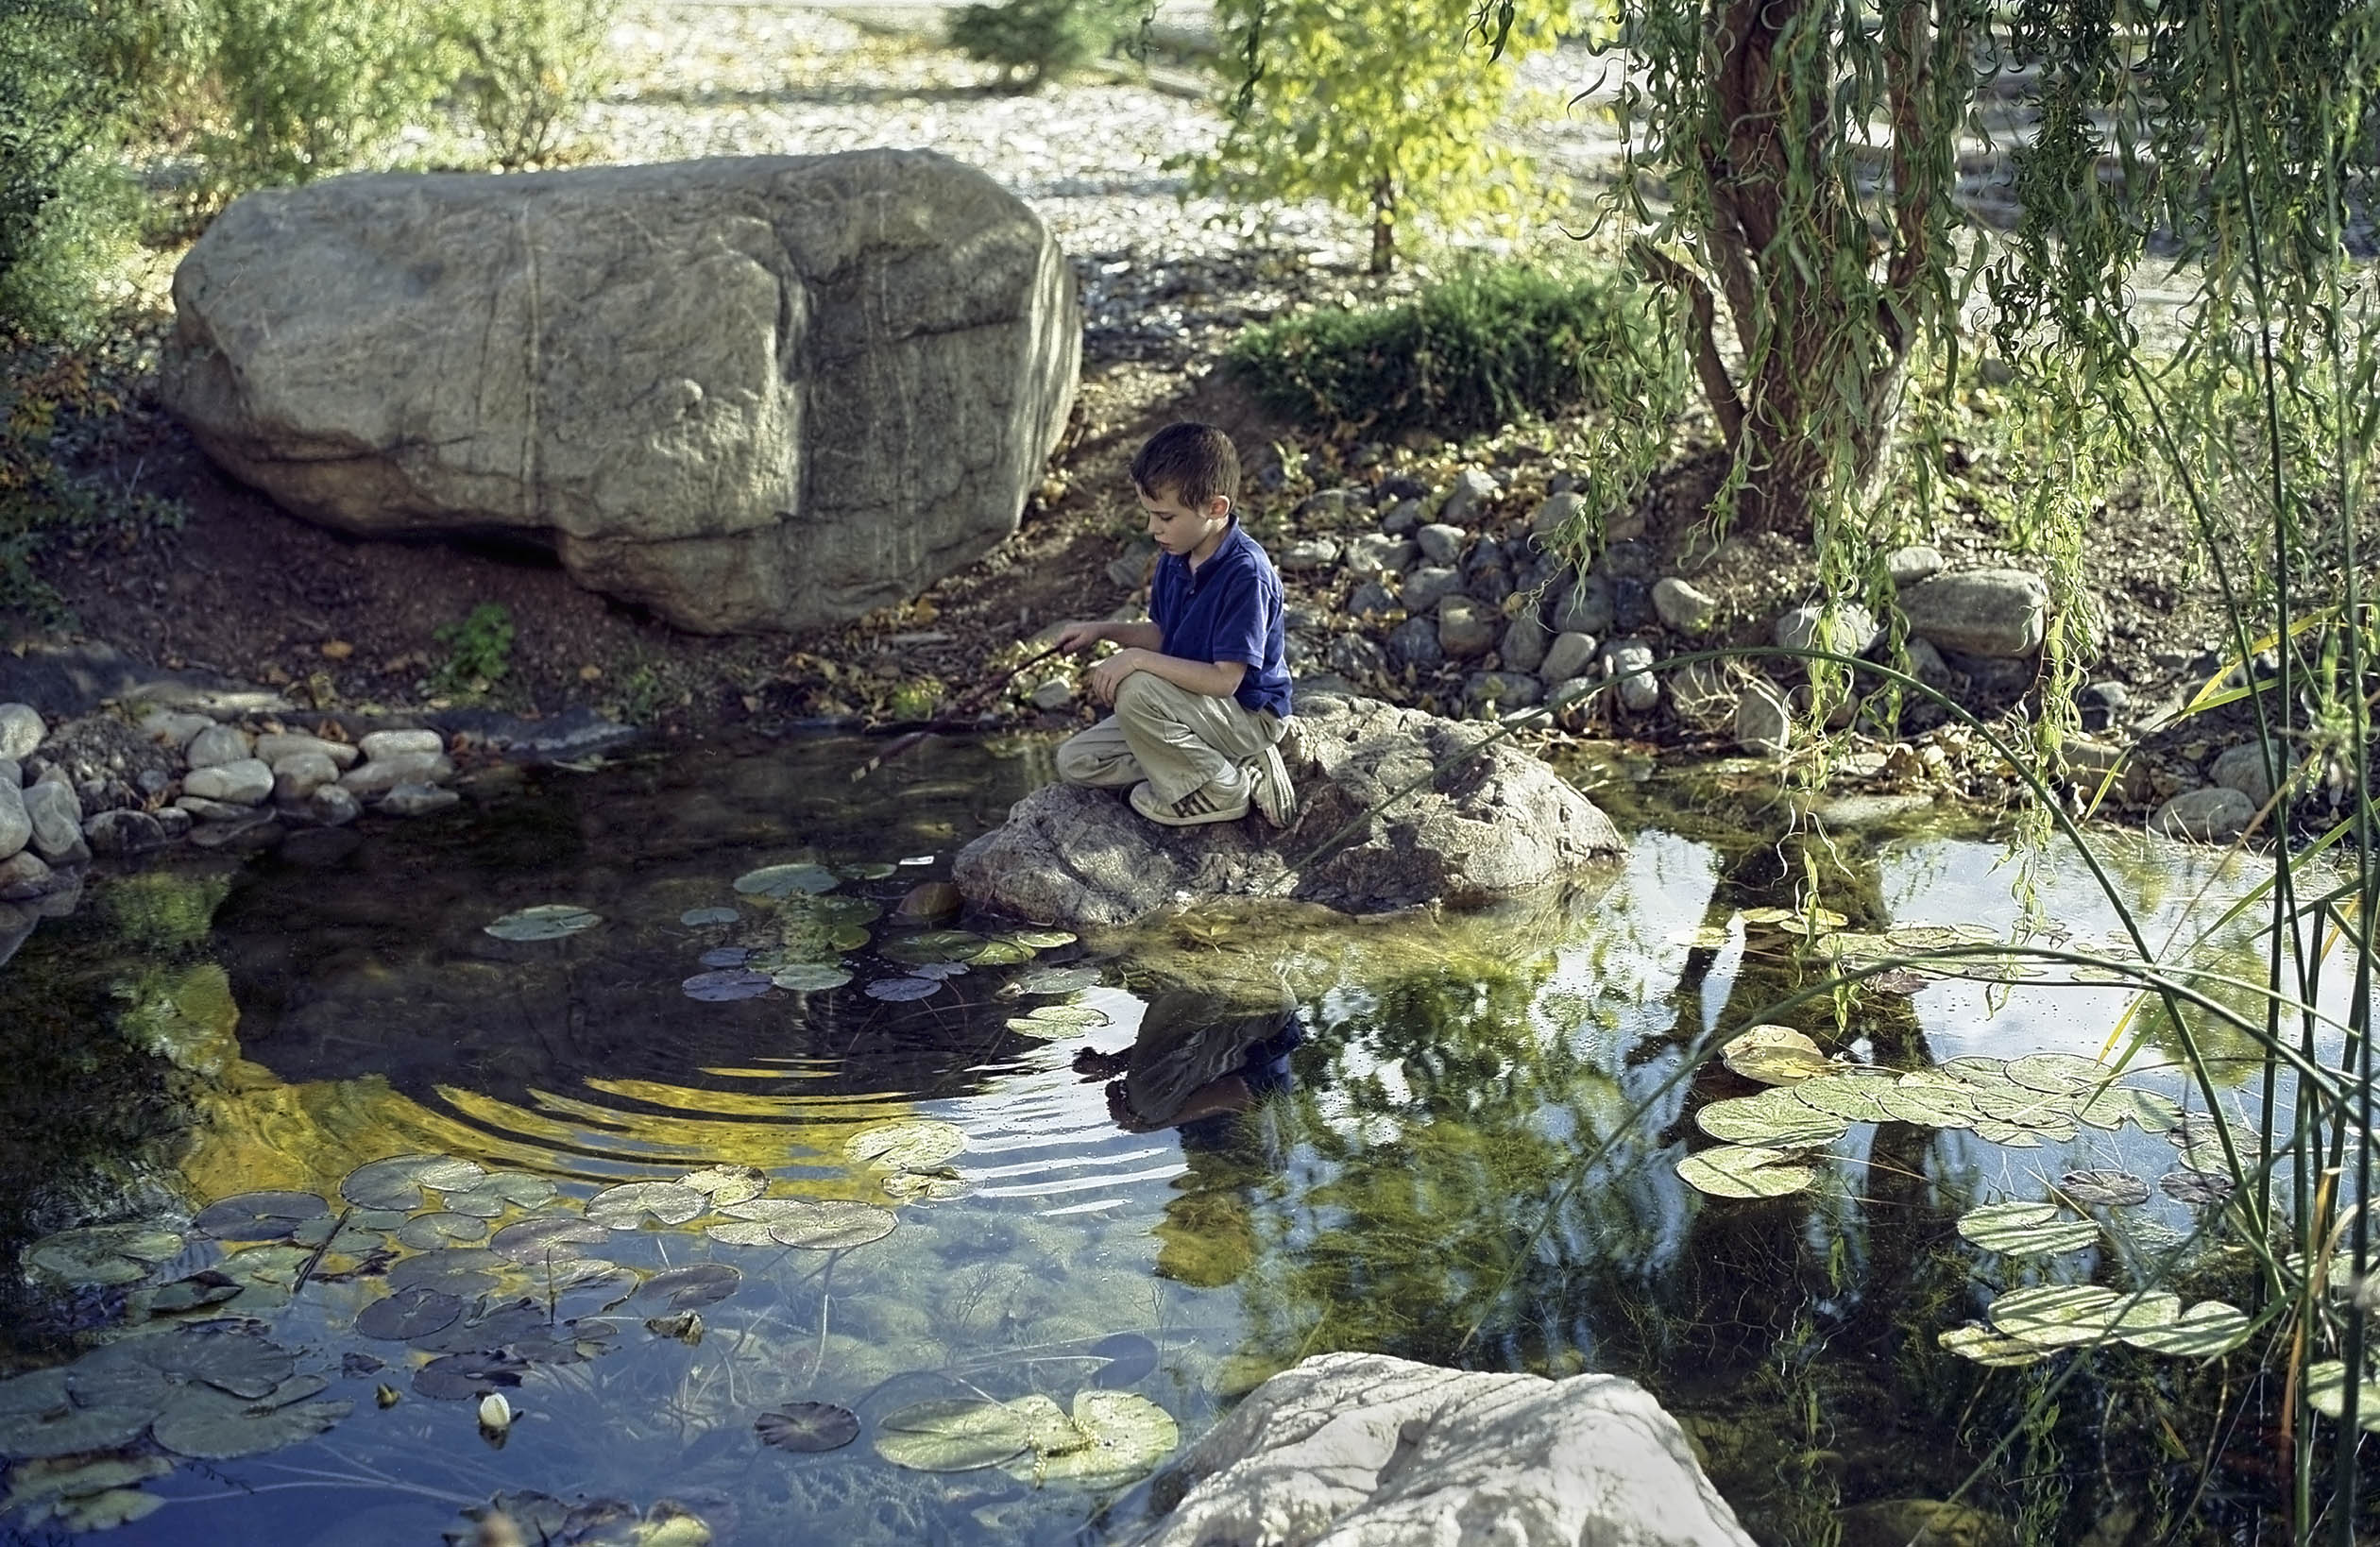 Stevenat Pond by Michael Nath